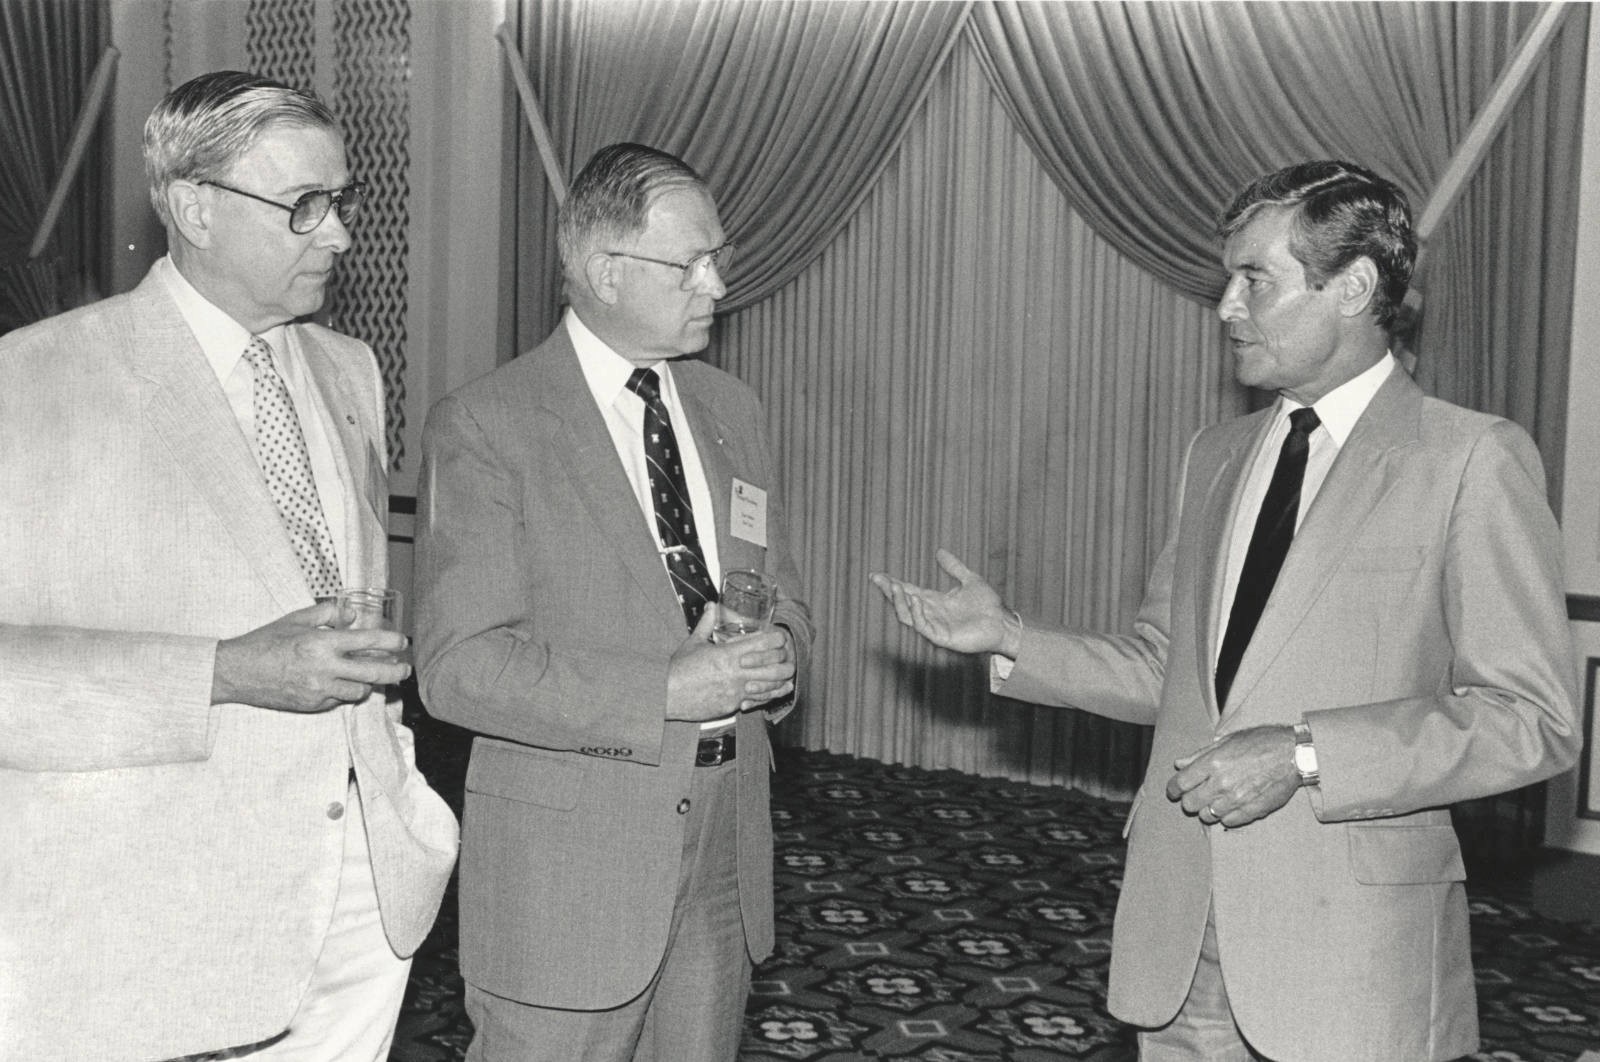 Barrett C. & Thomas U. Walker talking with Republican Congressman, Phil Crane, in 1987.